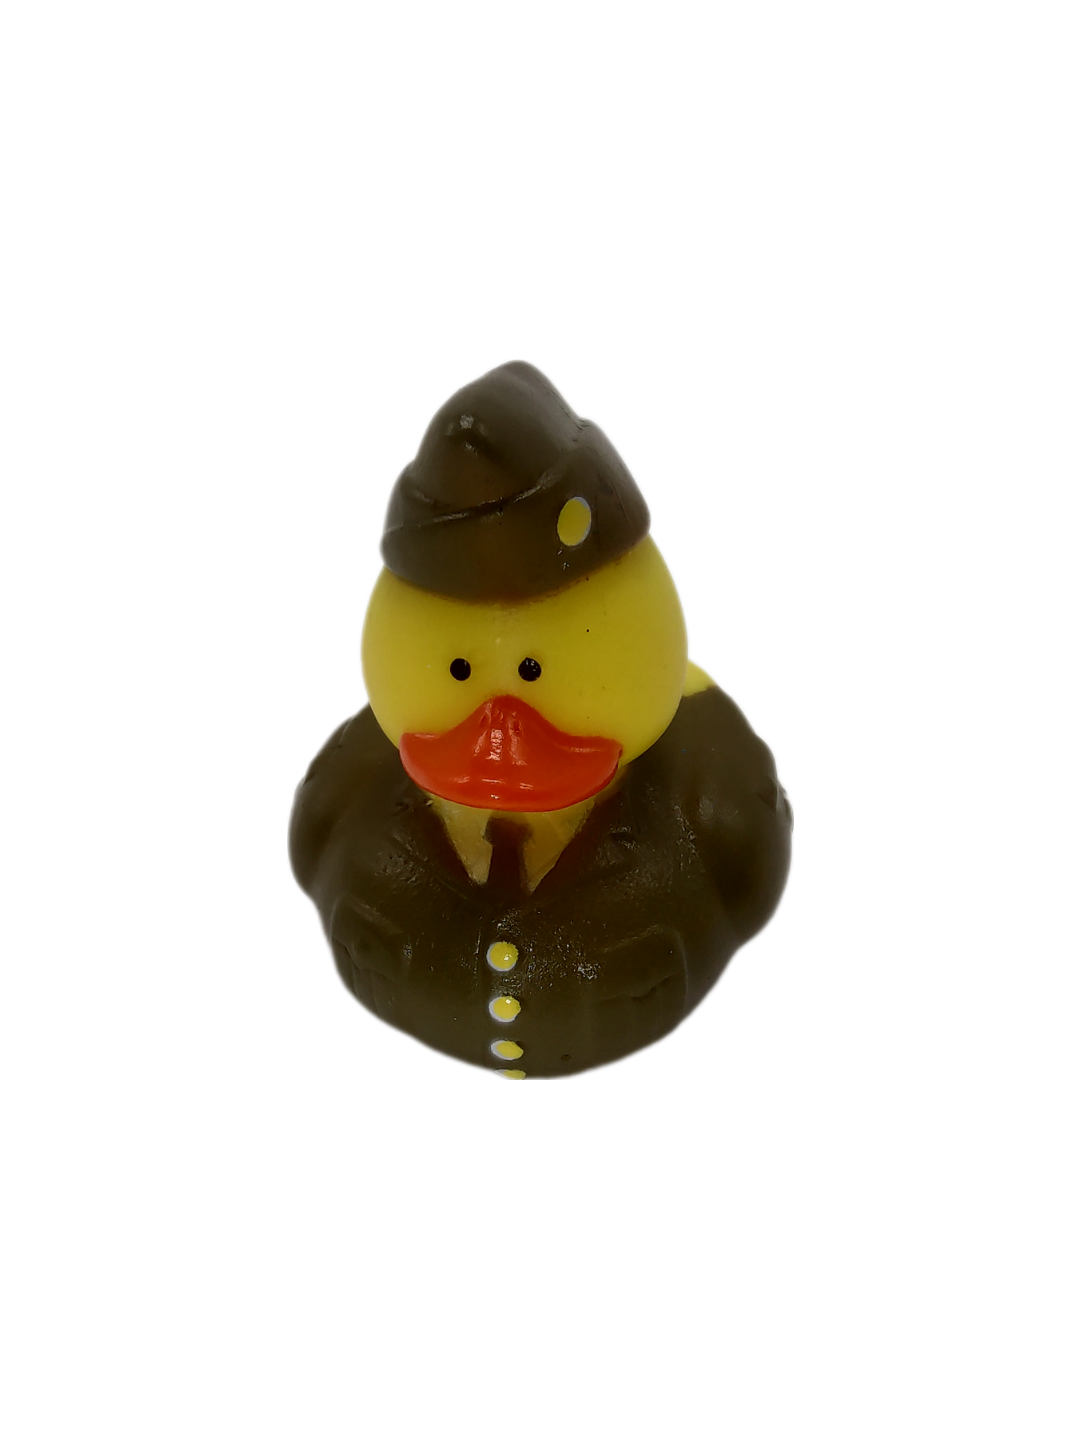 10 Mixed Military Ducks - 2" Rubber Ducks